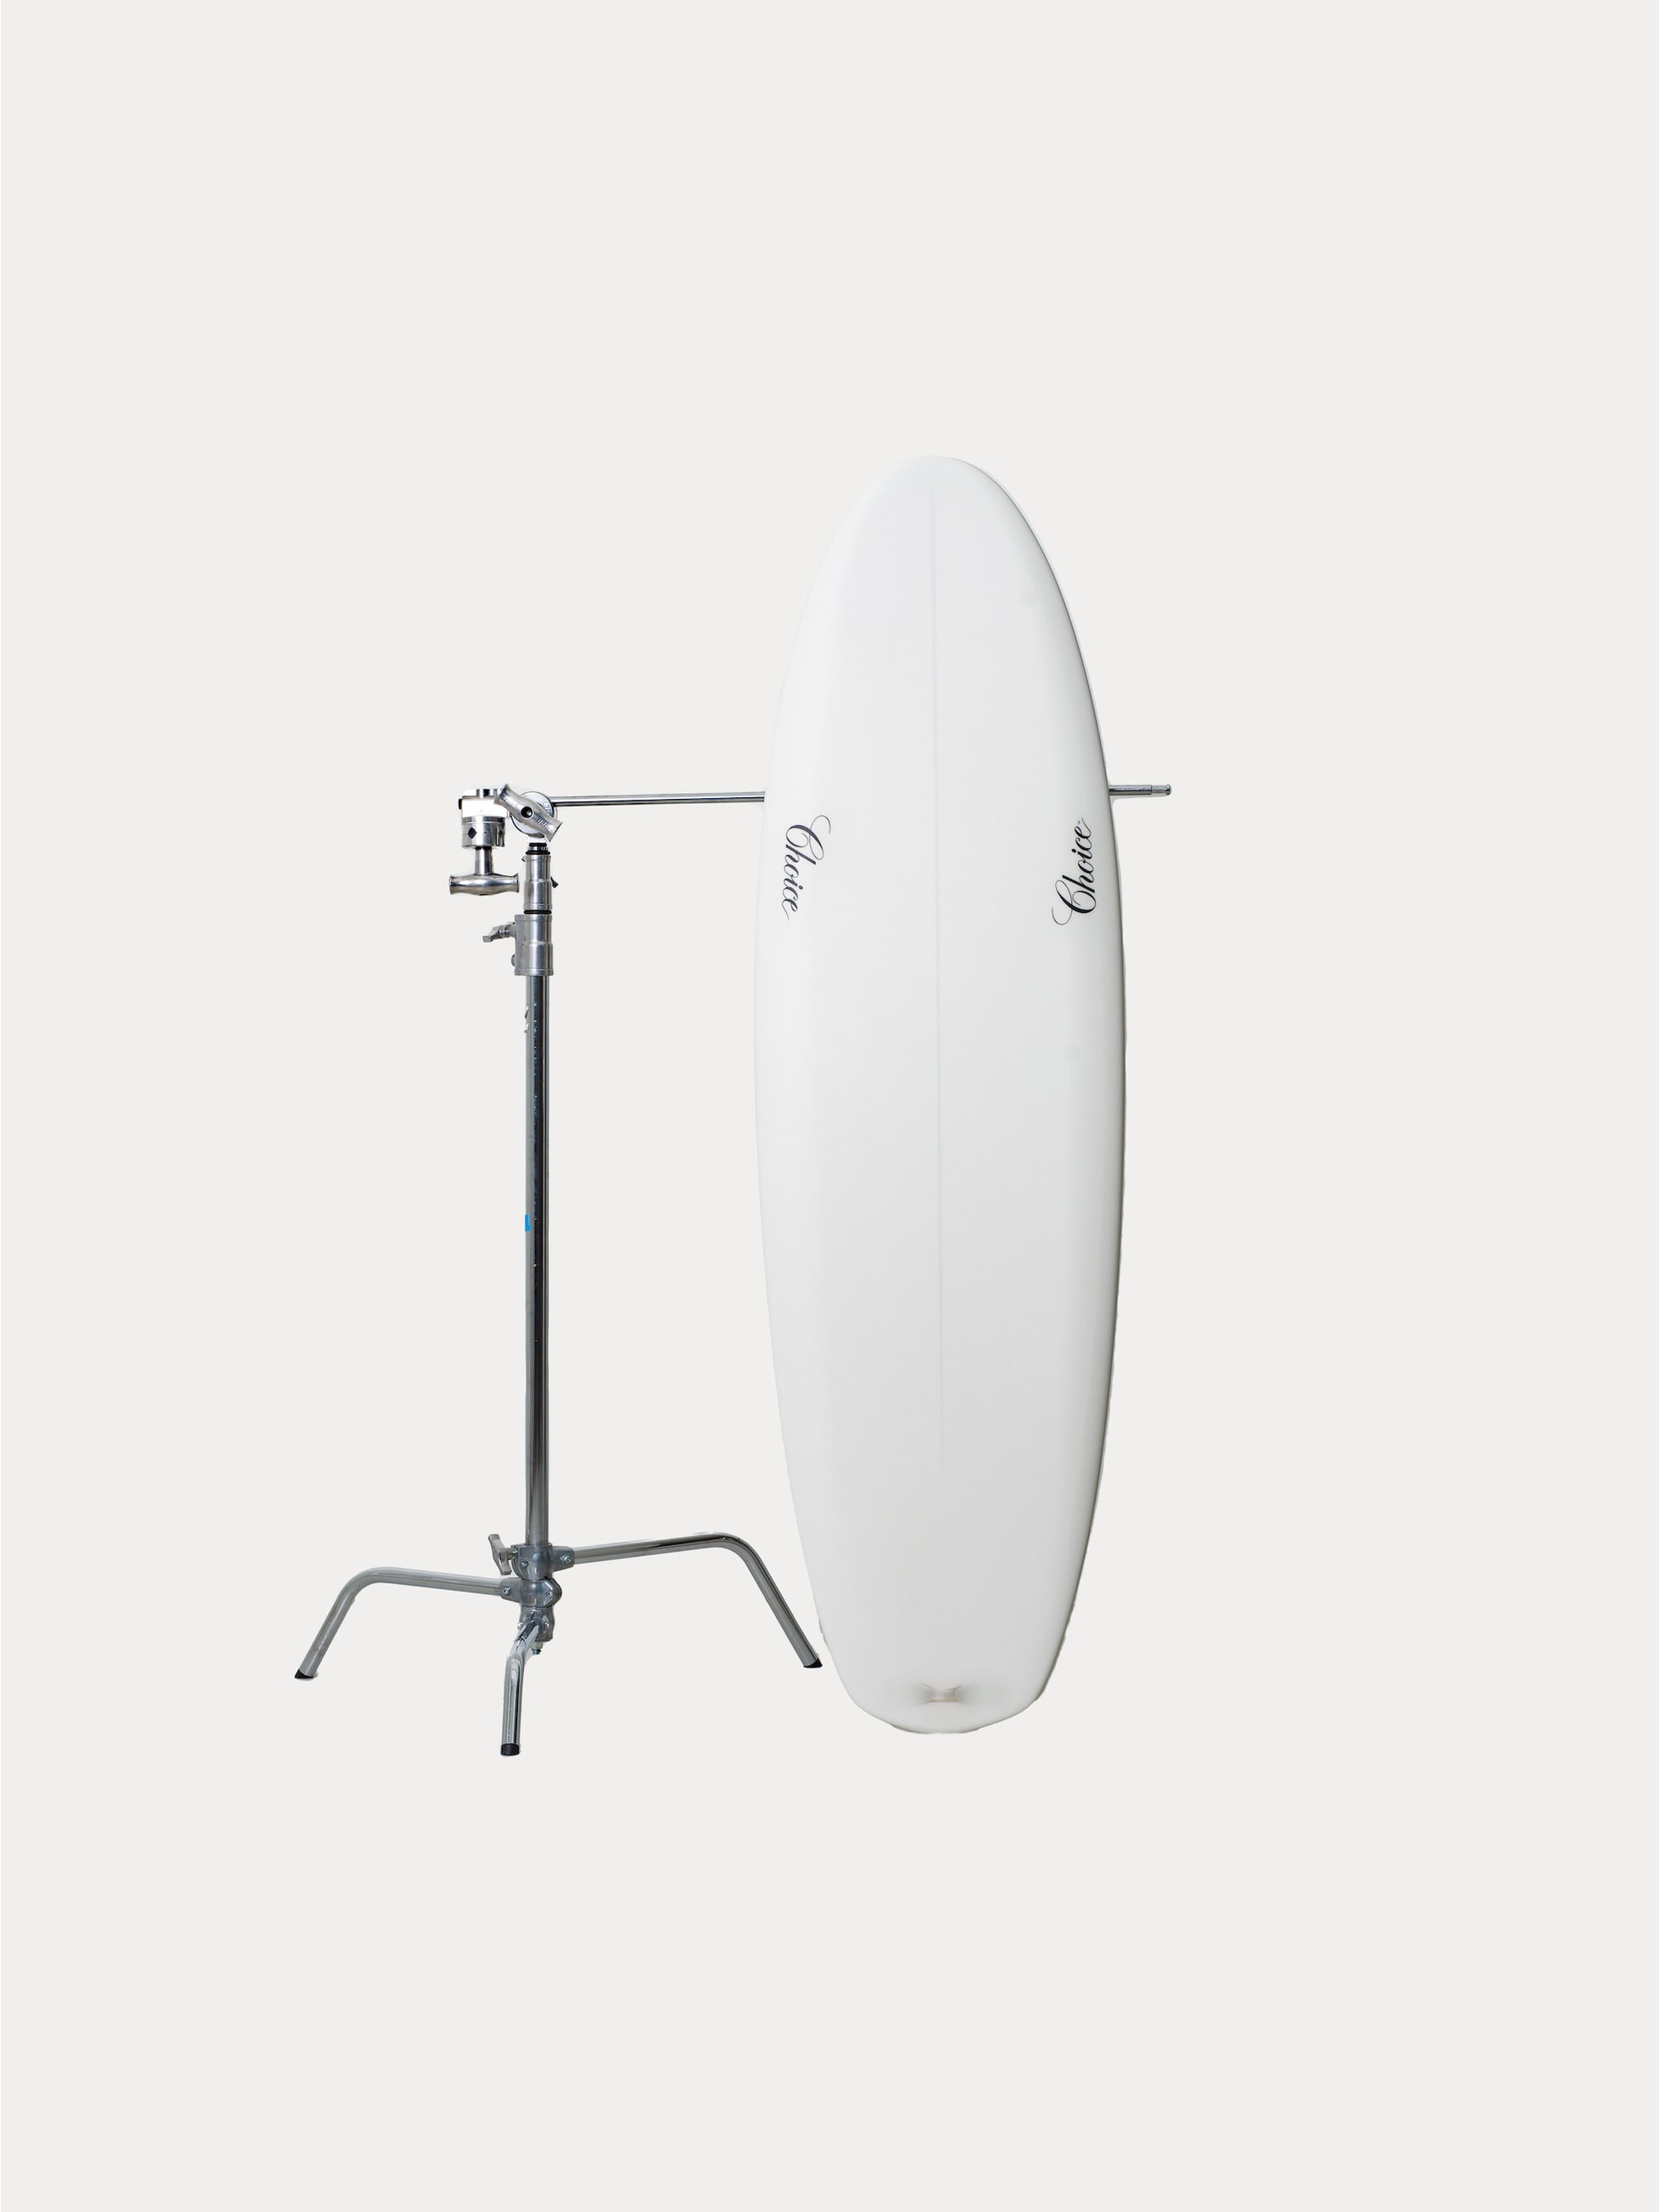 Surfboard Pavel Twinzer 5’11 詳細画像 off white 1